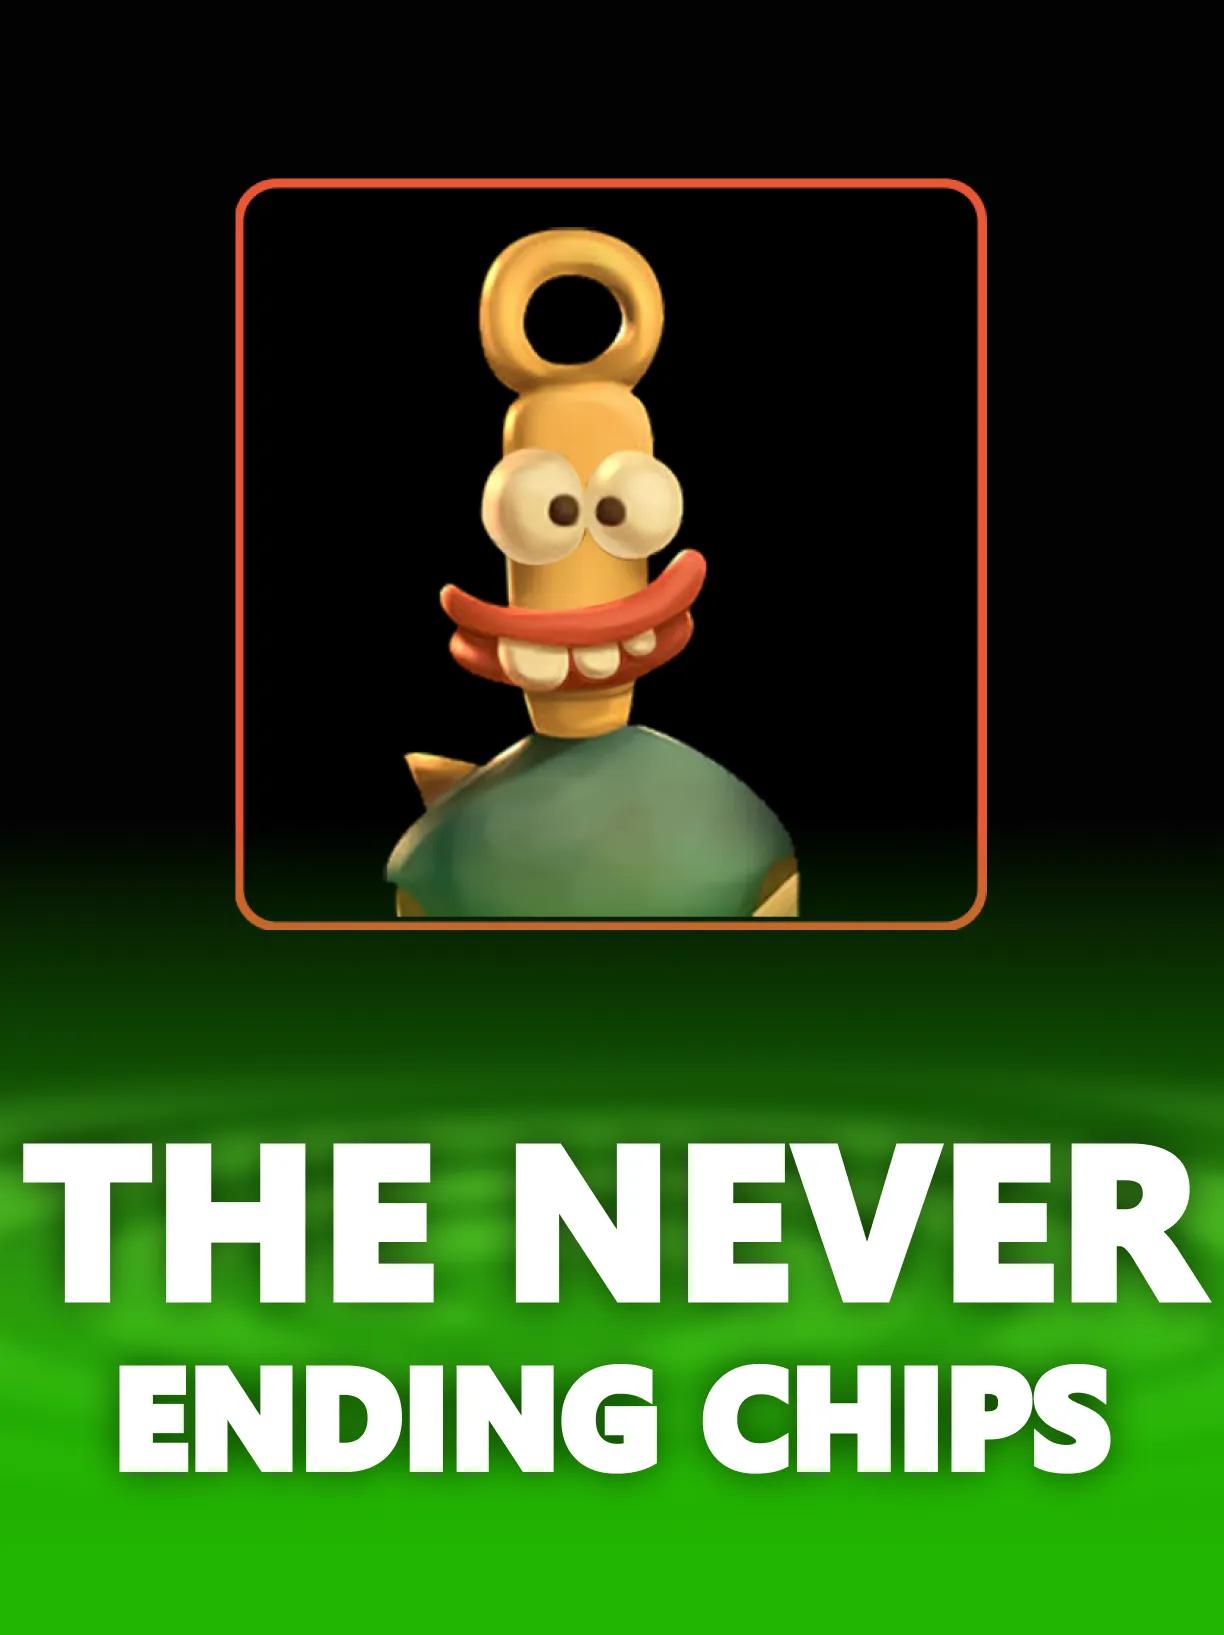 ug_The_Never_Ending_Chips_square.webp